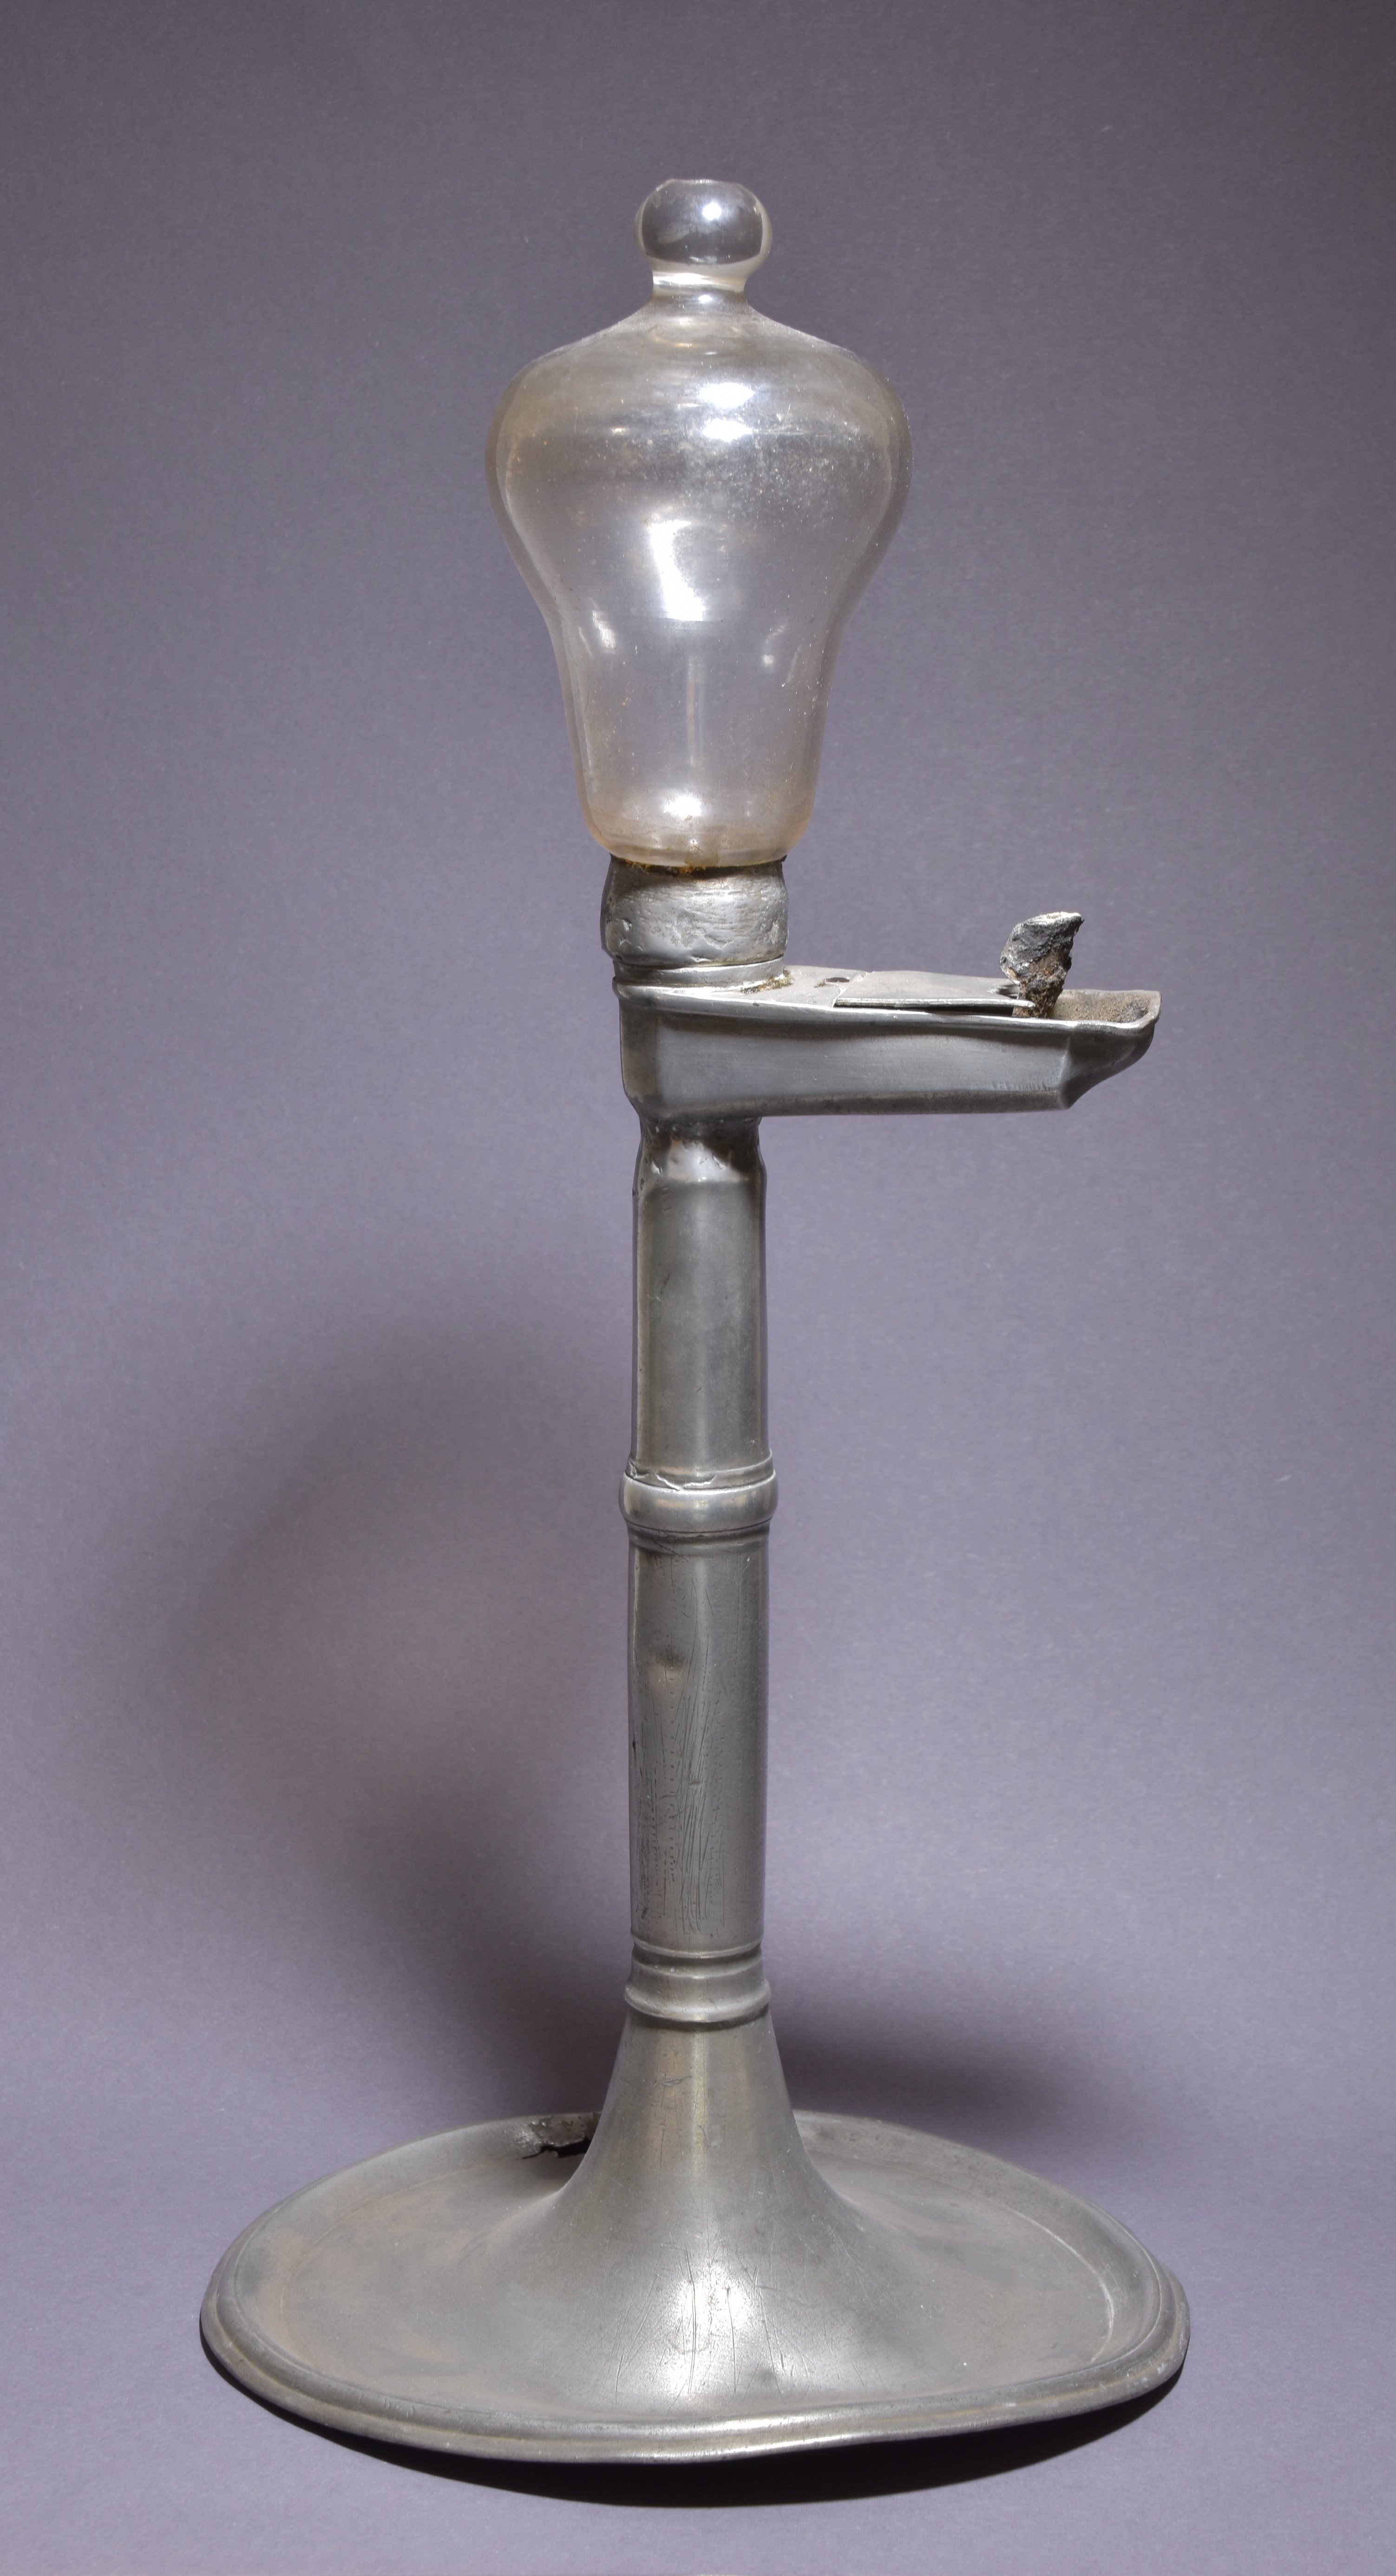 Öllampe des 19. Jahrhunderts aus Zinn mit Glasbehälter (ReMO - Regionalmuseum Oberhavel CC BY-NC-SA)